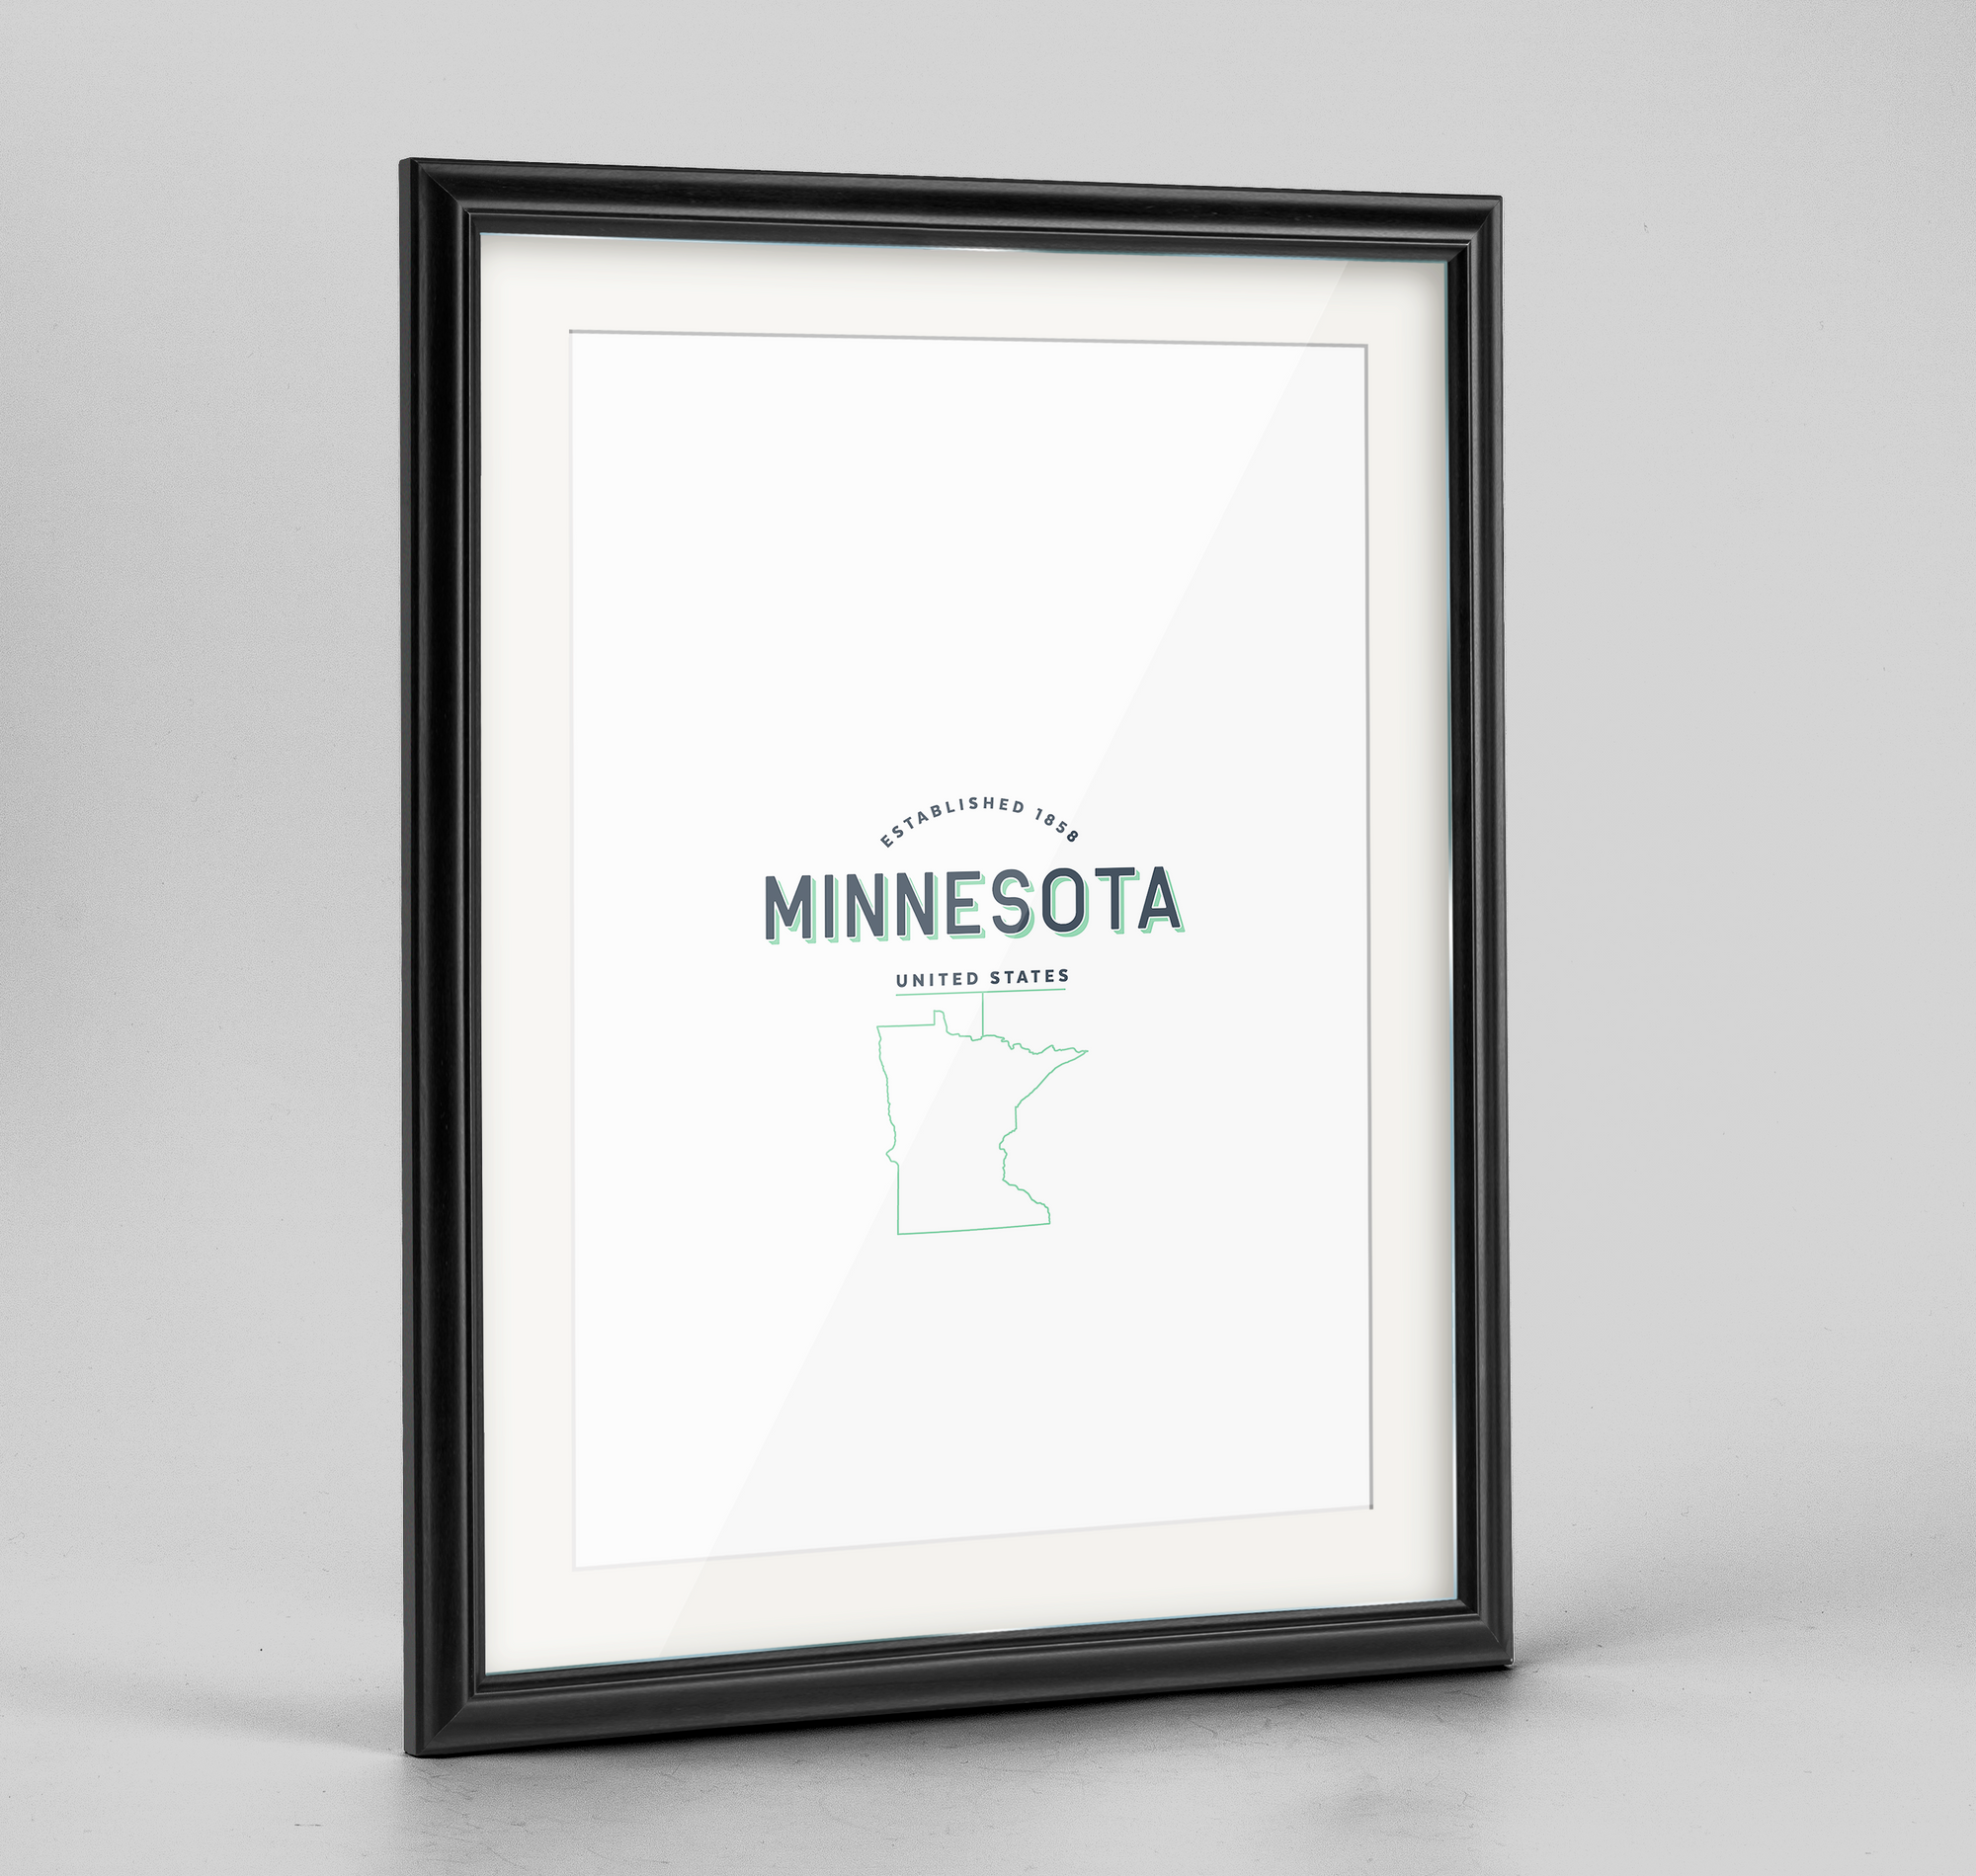 Minnesota Word Art Print - "Word Art" - Point Two Design